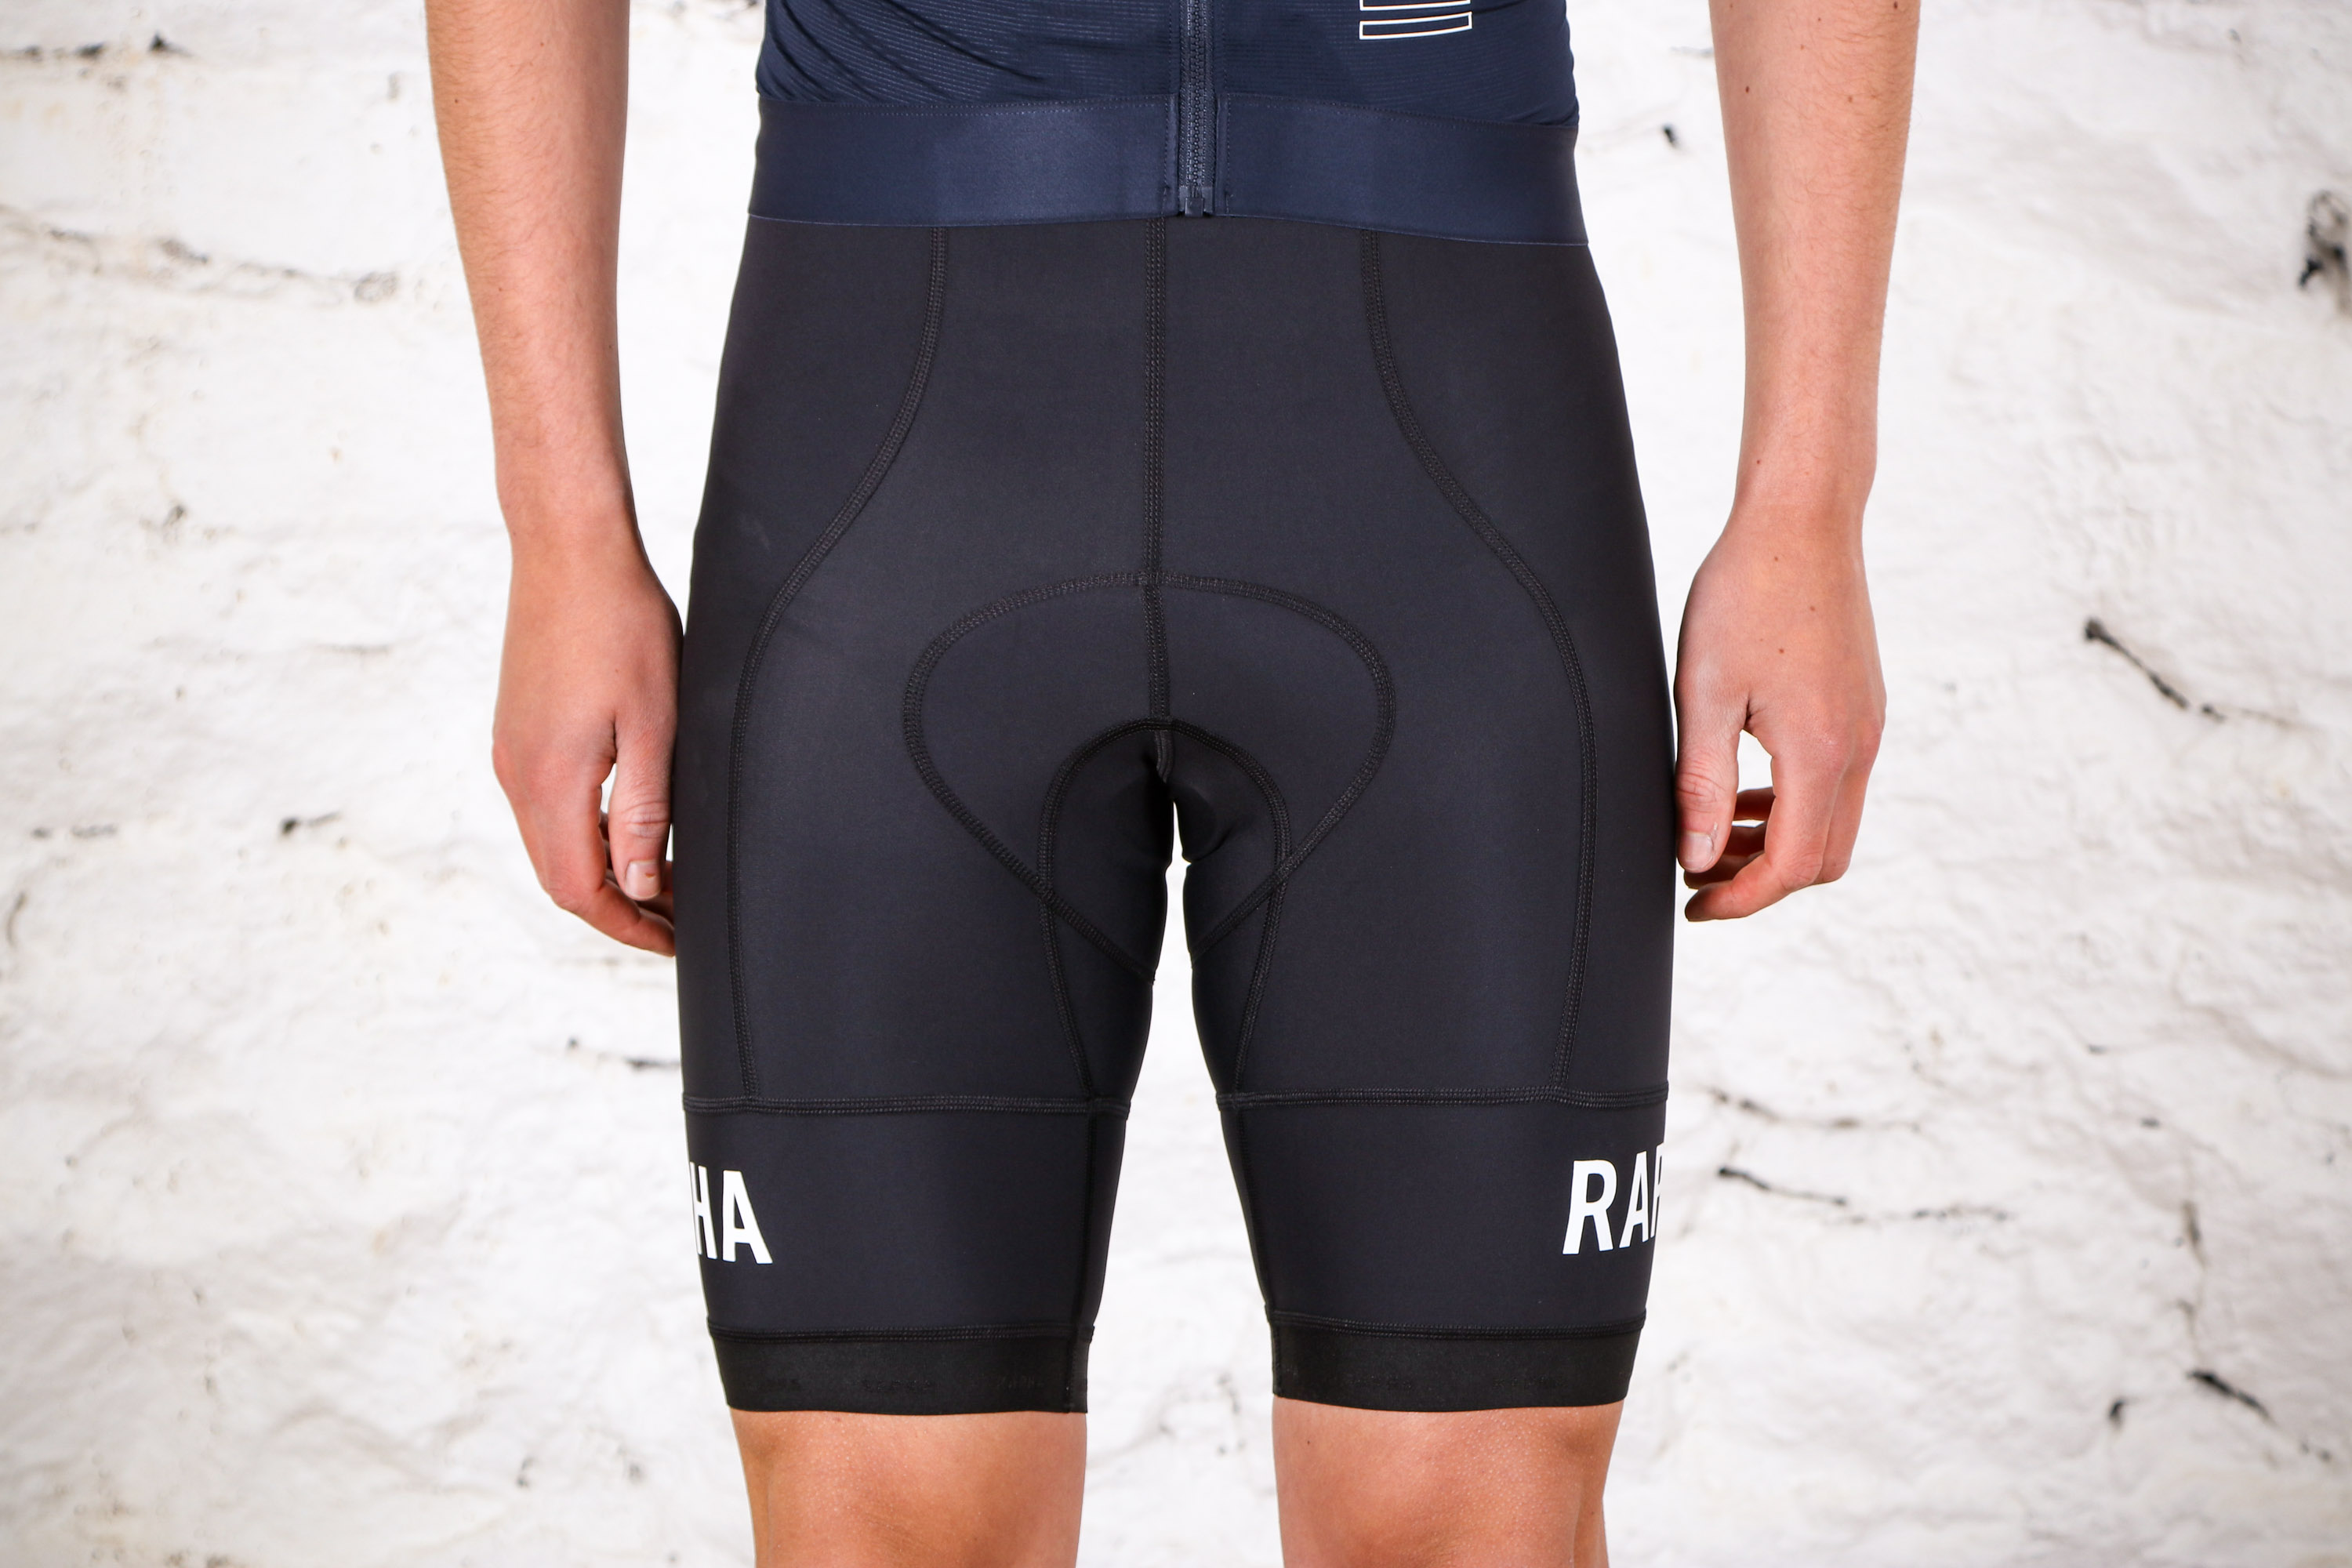 rapha bike shorts